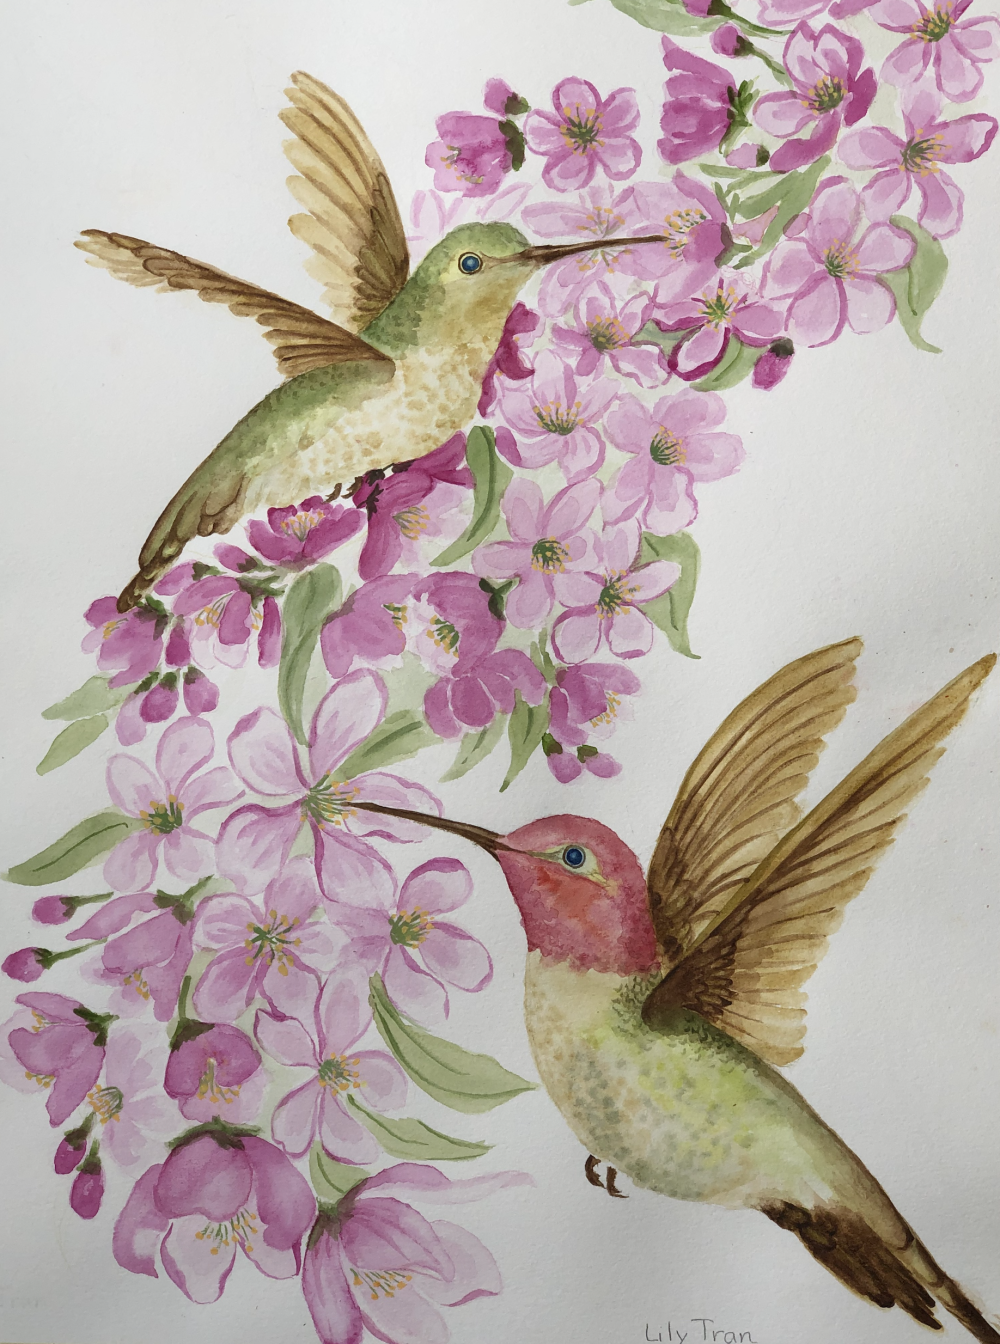 11. Lily Tran, “Happy Hummingbird," 2022, Watercolor on paper